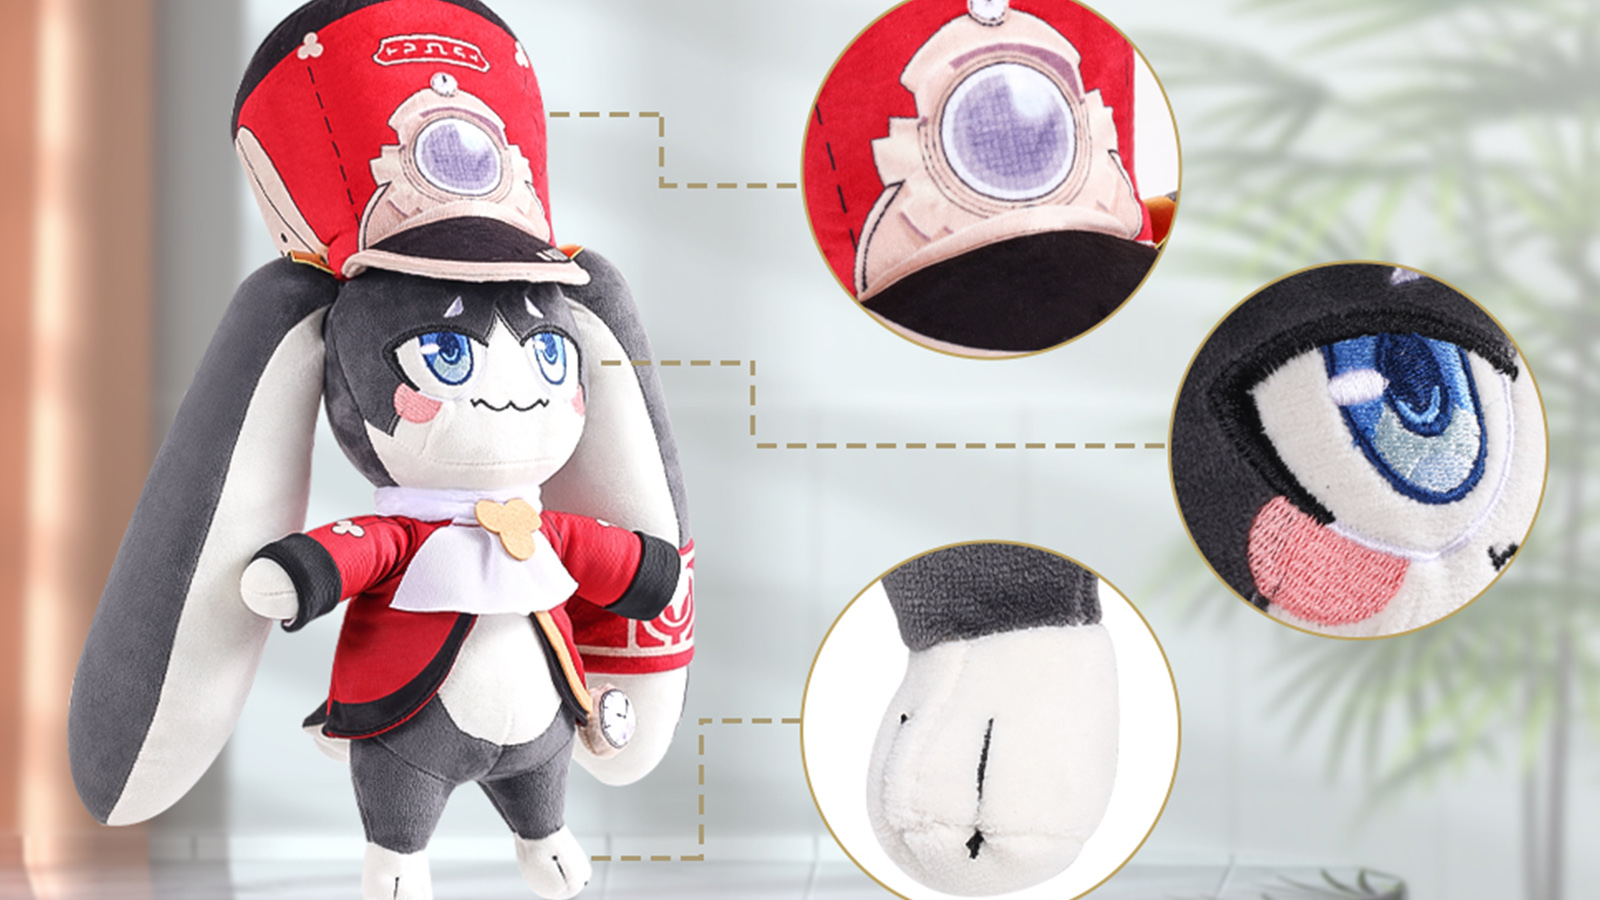 UTIEHD Honkai Star Rail Plush Pom-pom 17", Big Size Plushie Stuffed Toy Doll, Cosplay Costume Plushy Props for Fans